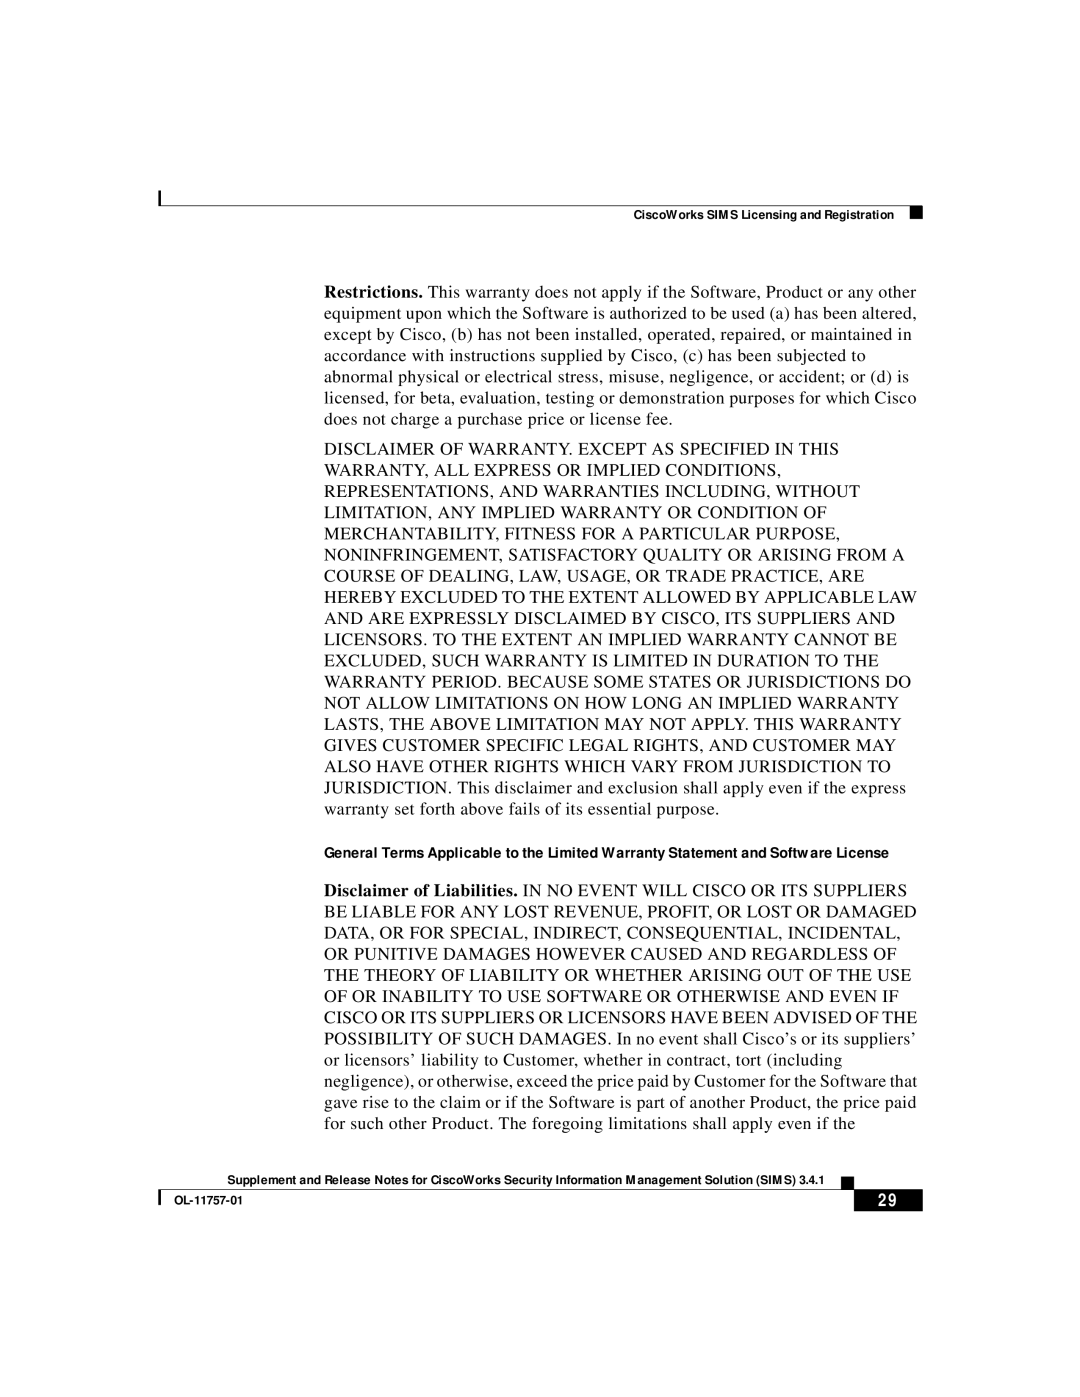 Cisco Systems OL-11757-01 manual 